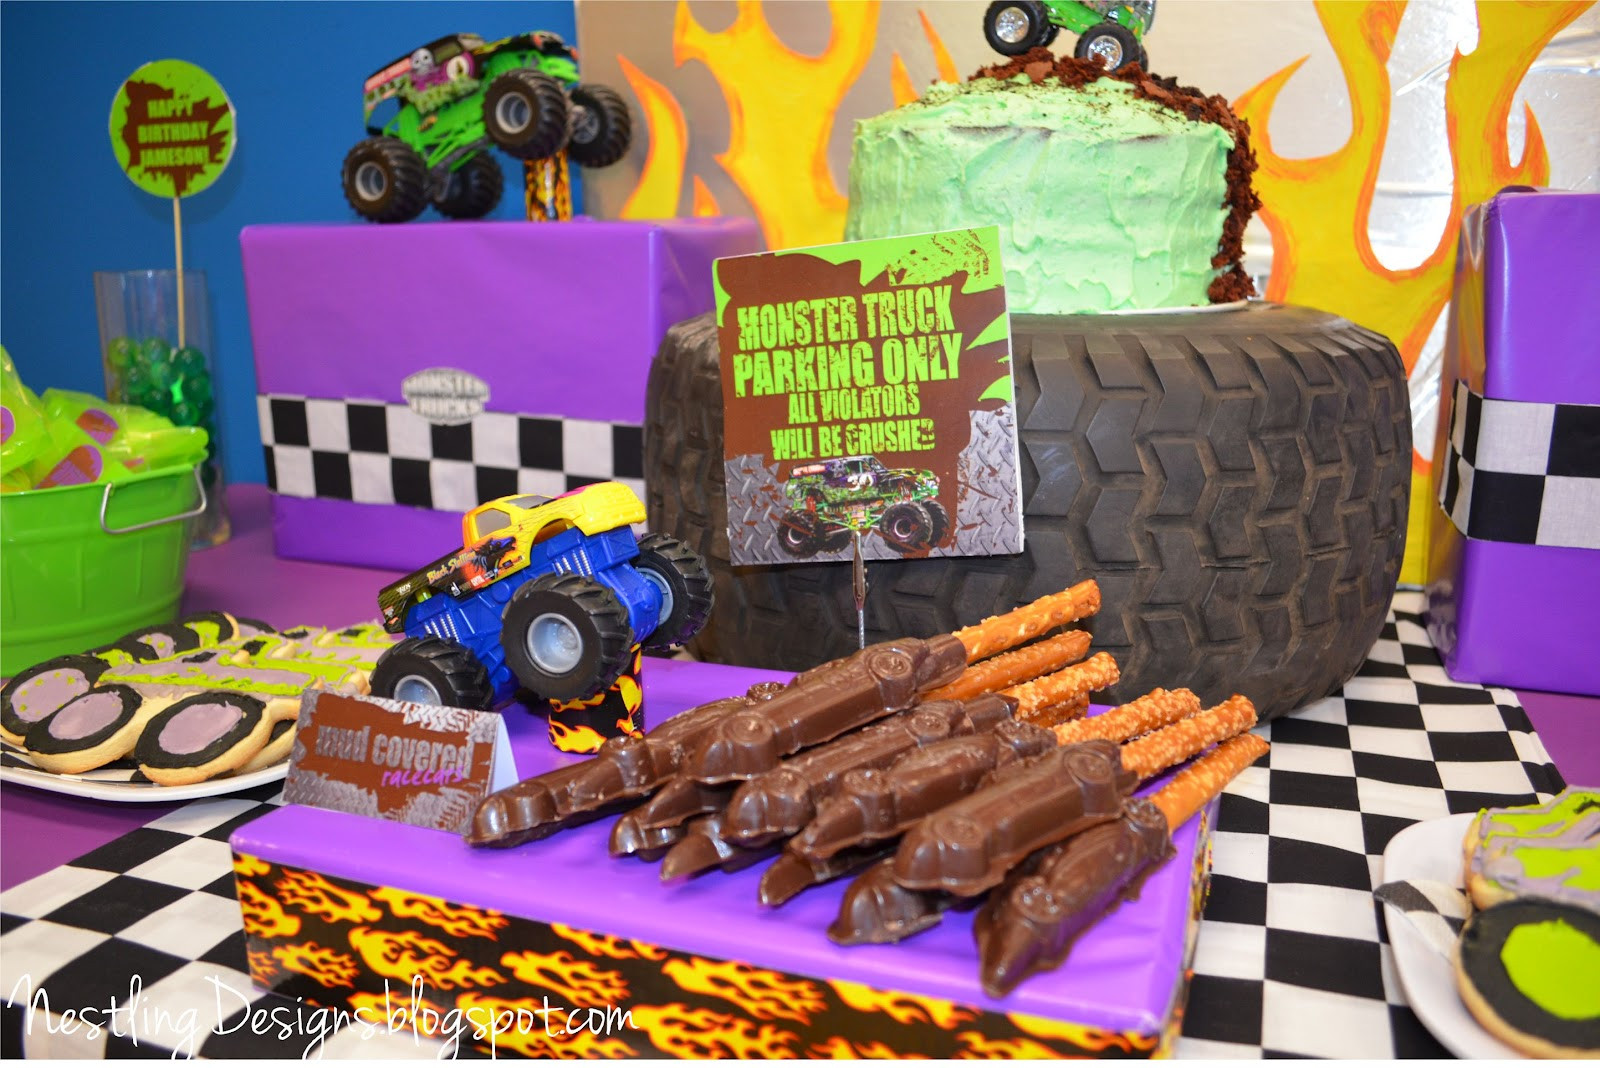 Monster Truck Birthday Decorations
 Nestling Monster Truck Party Reveal